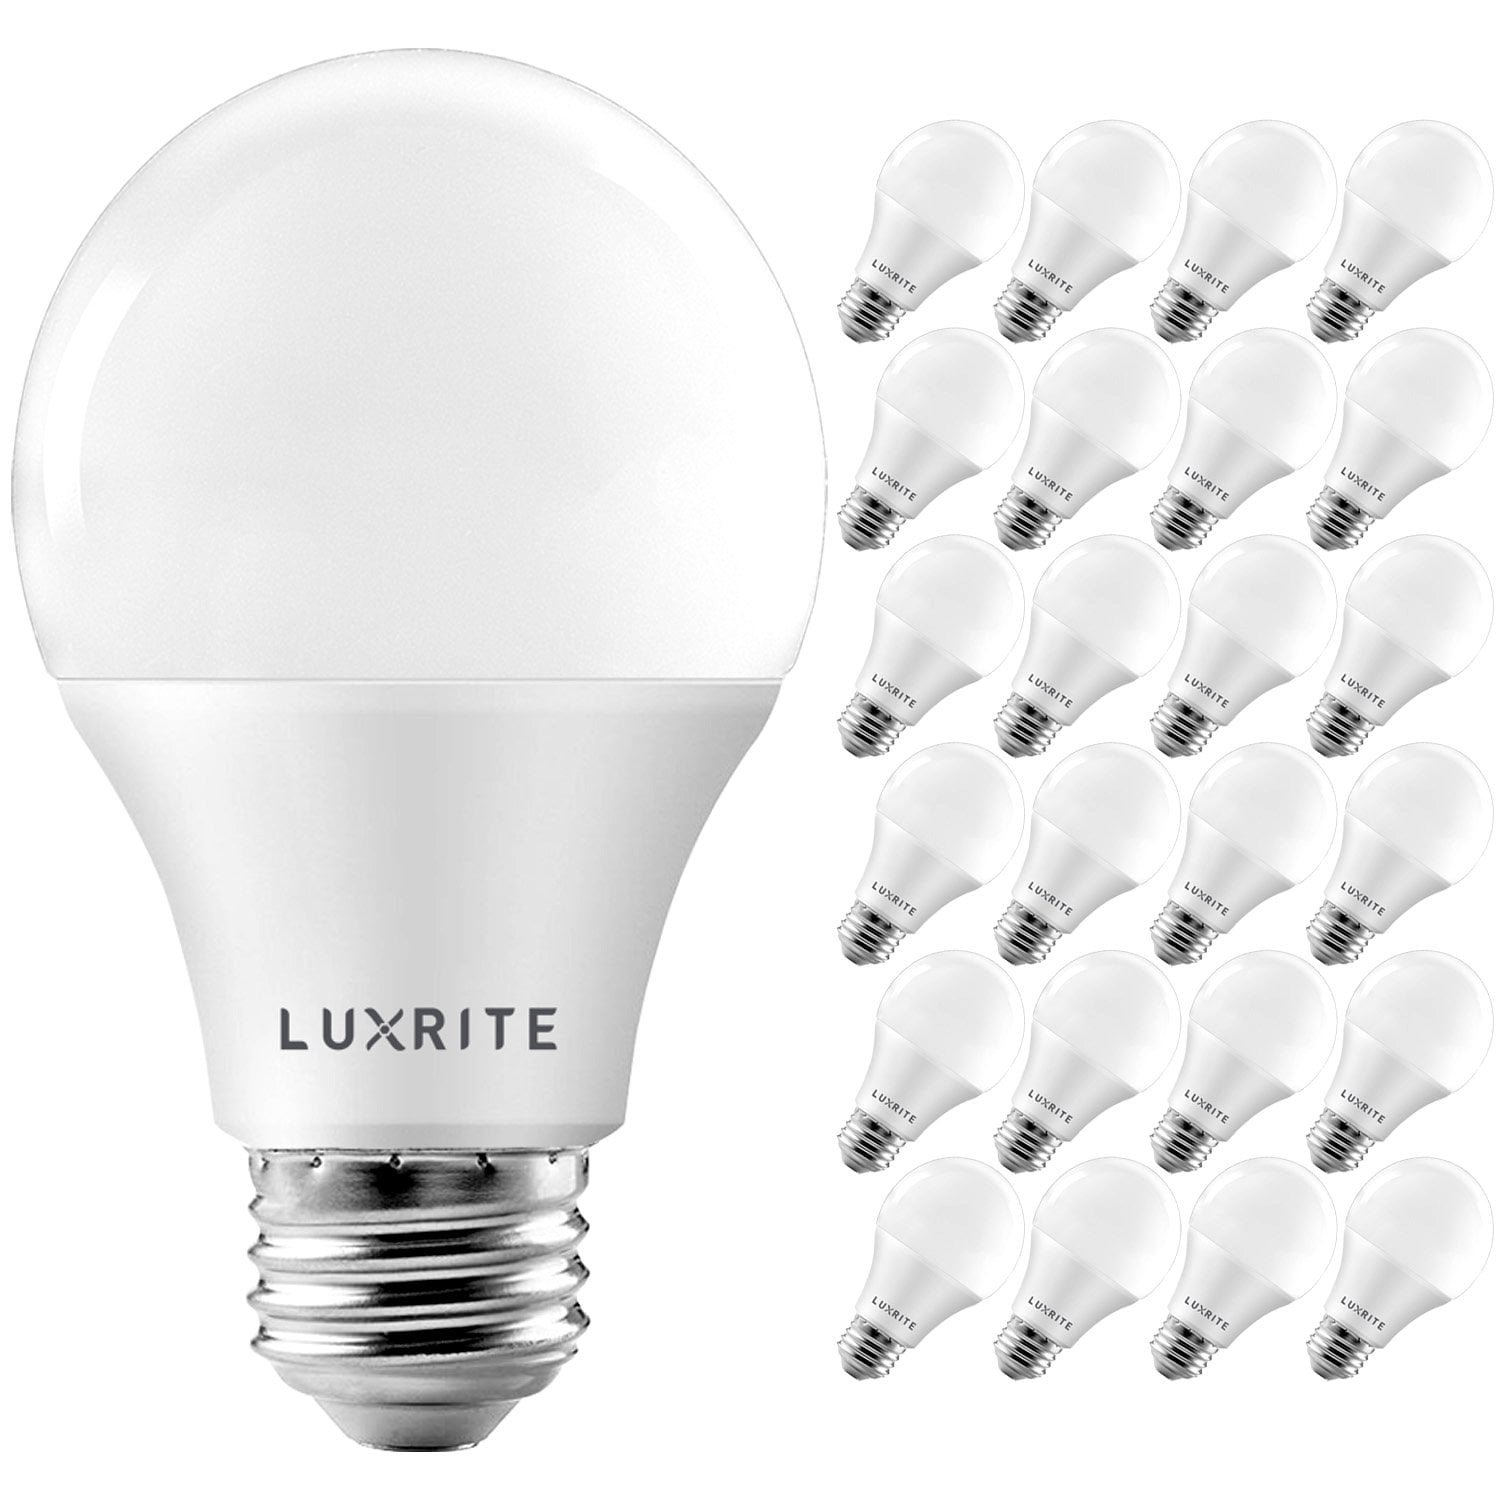 Luxrite Dimmable LED Bulb 9W 60W 3000K Warm White, Lumens, E26, 24-Pack - Walmart.com